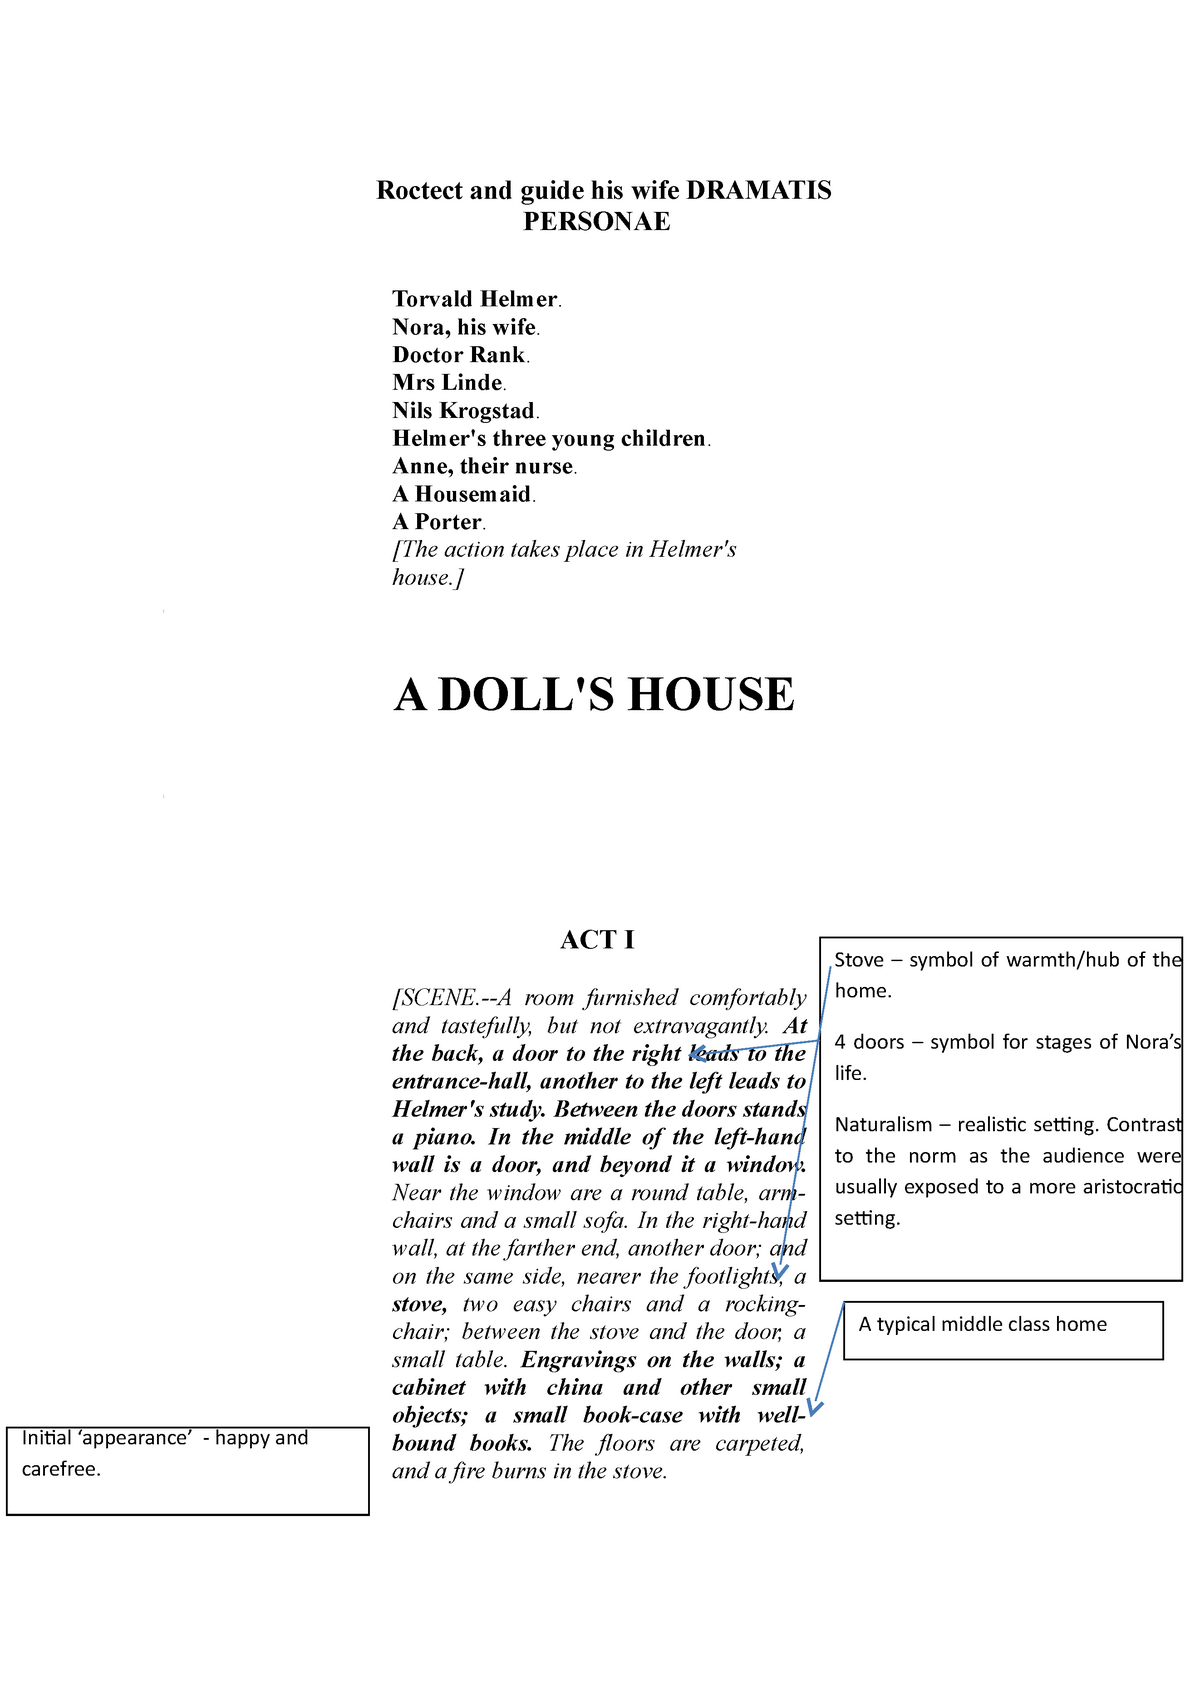 a doll's house written assignment ib